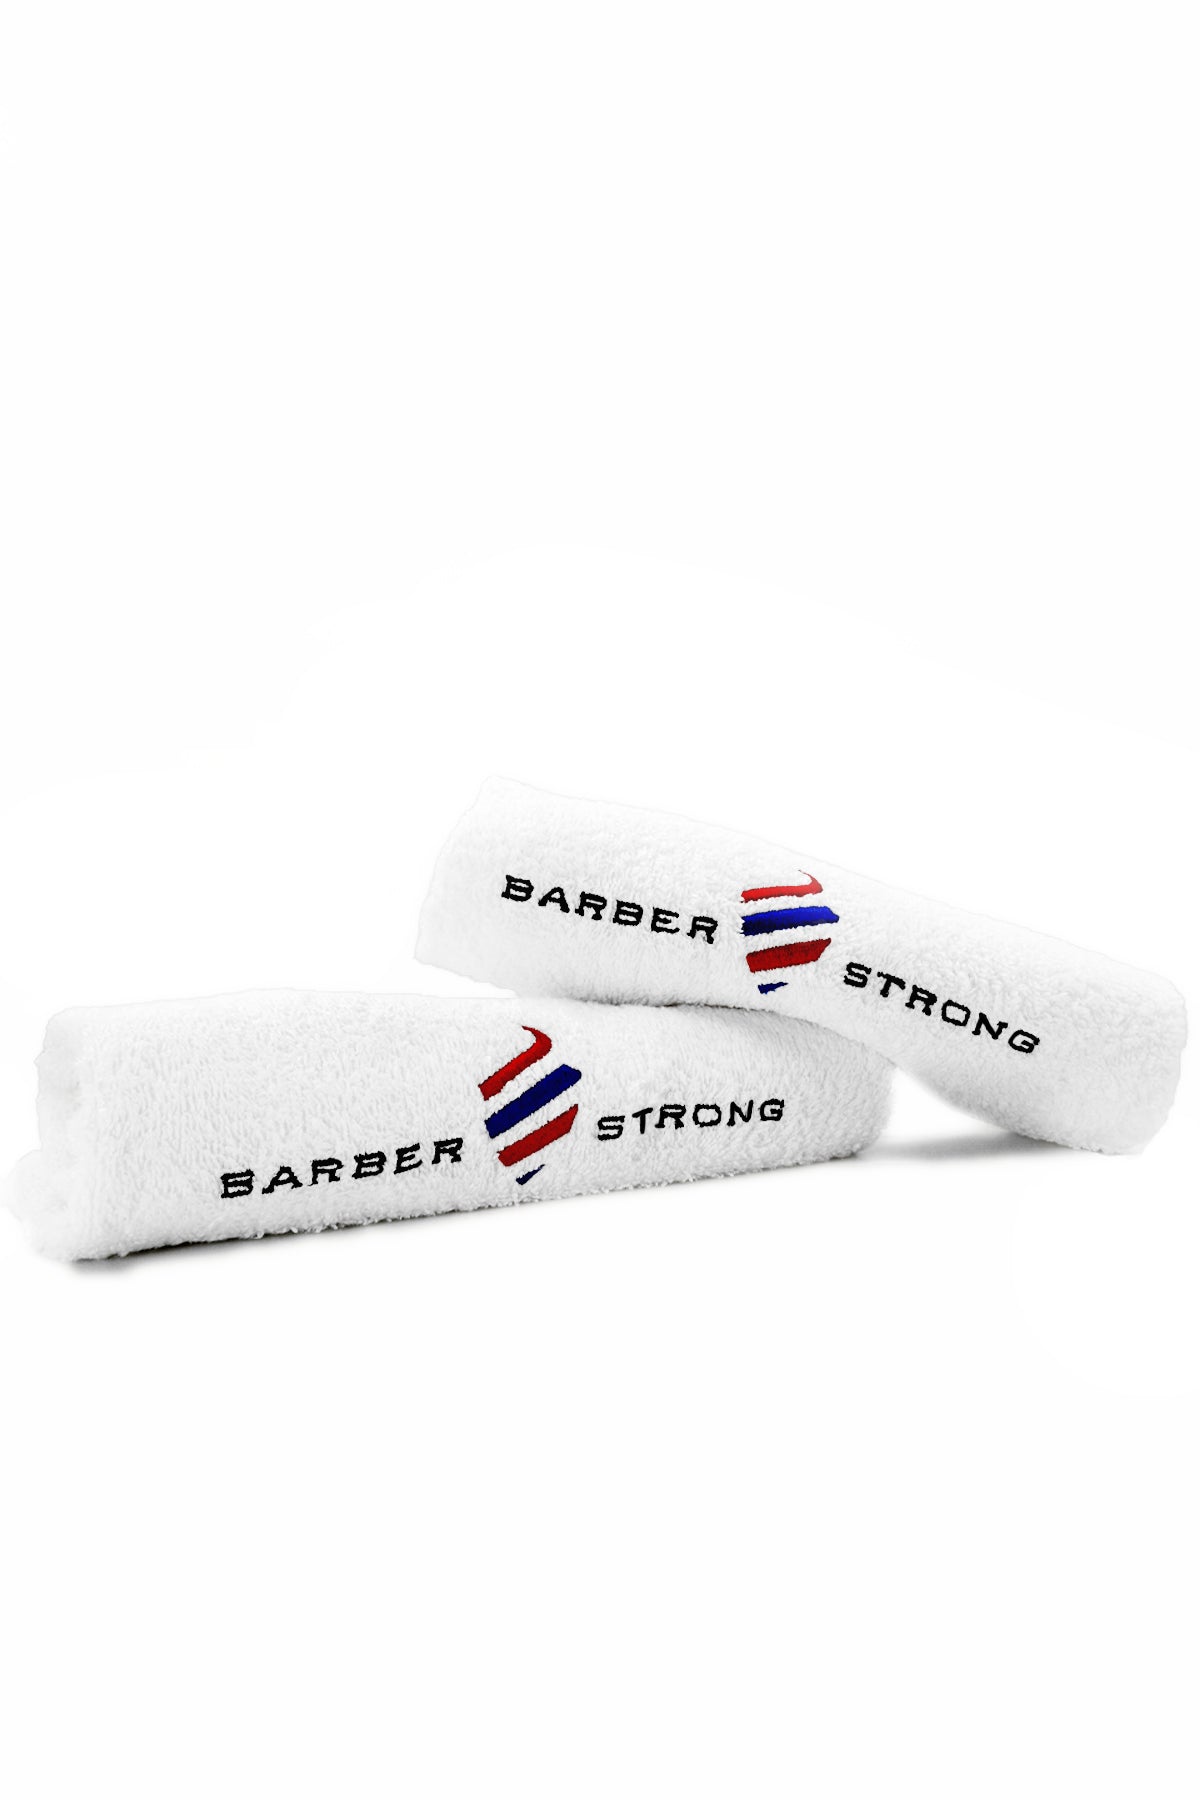 6pk Bleach Proof Barber Towels white